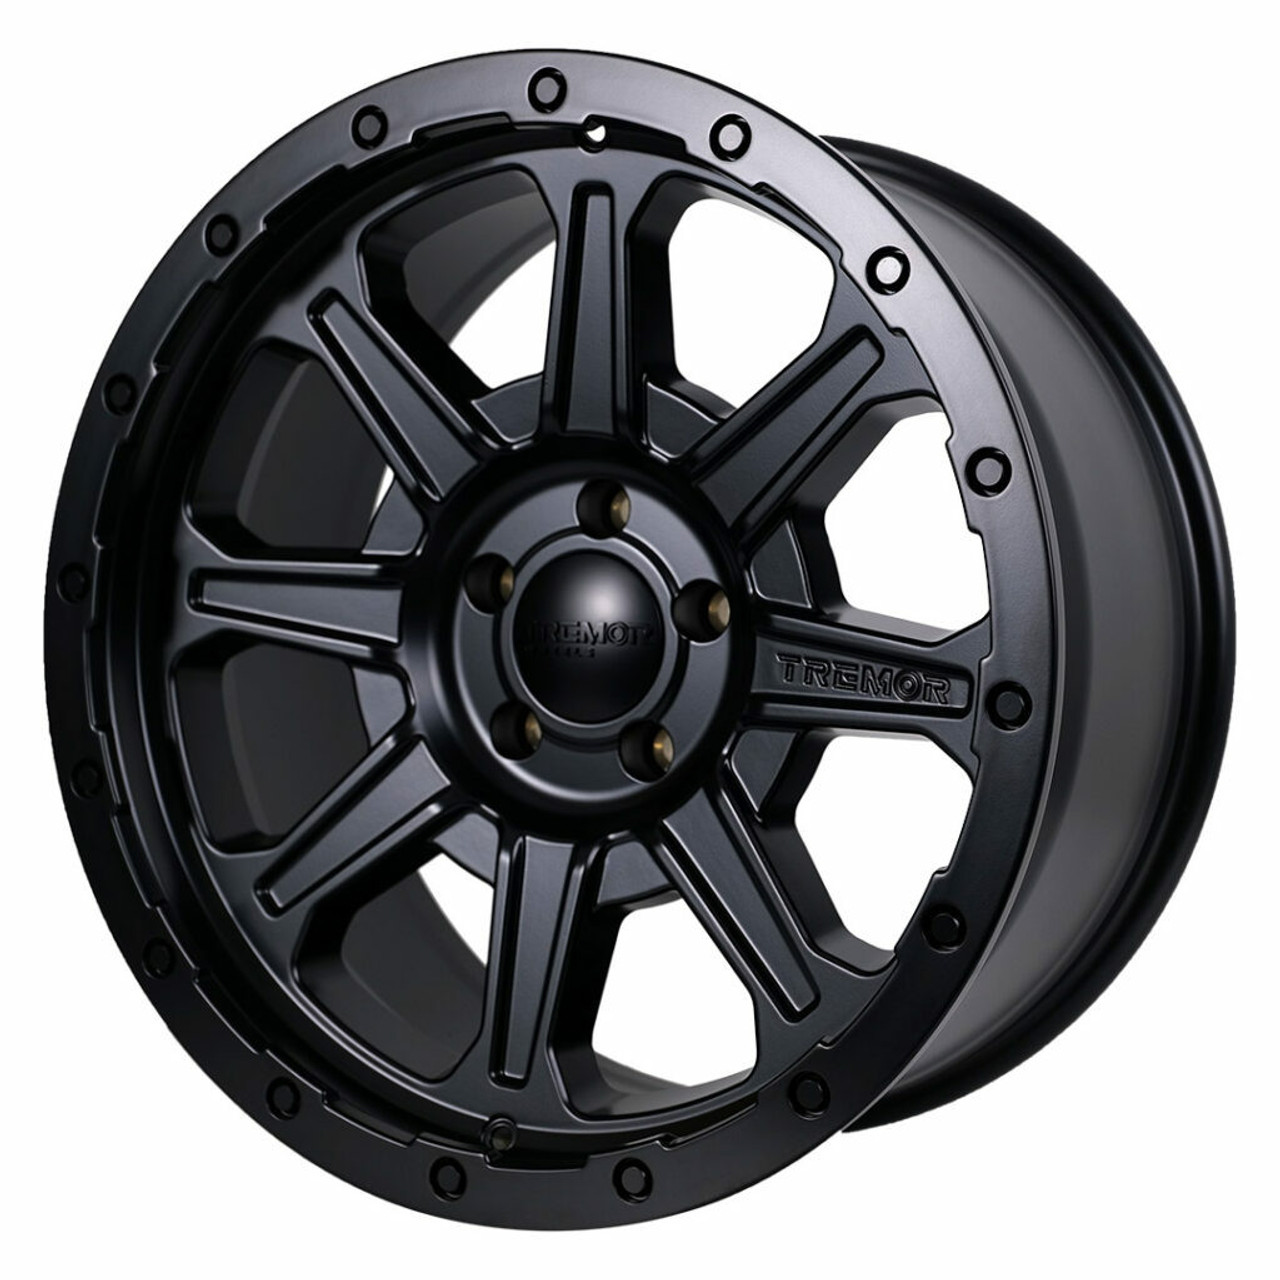 Set 4 17" Tremor 103 Impact Satin Black Wheels 17x8.5 8x6.5 0mm For Chevy GMC